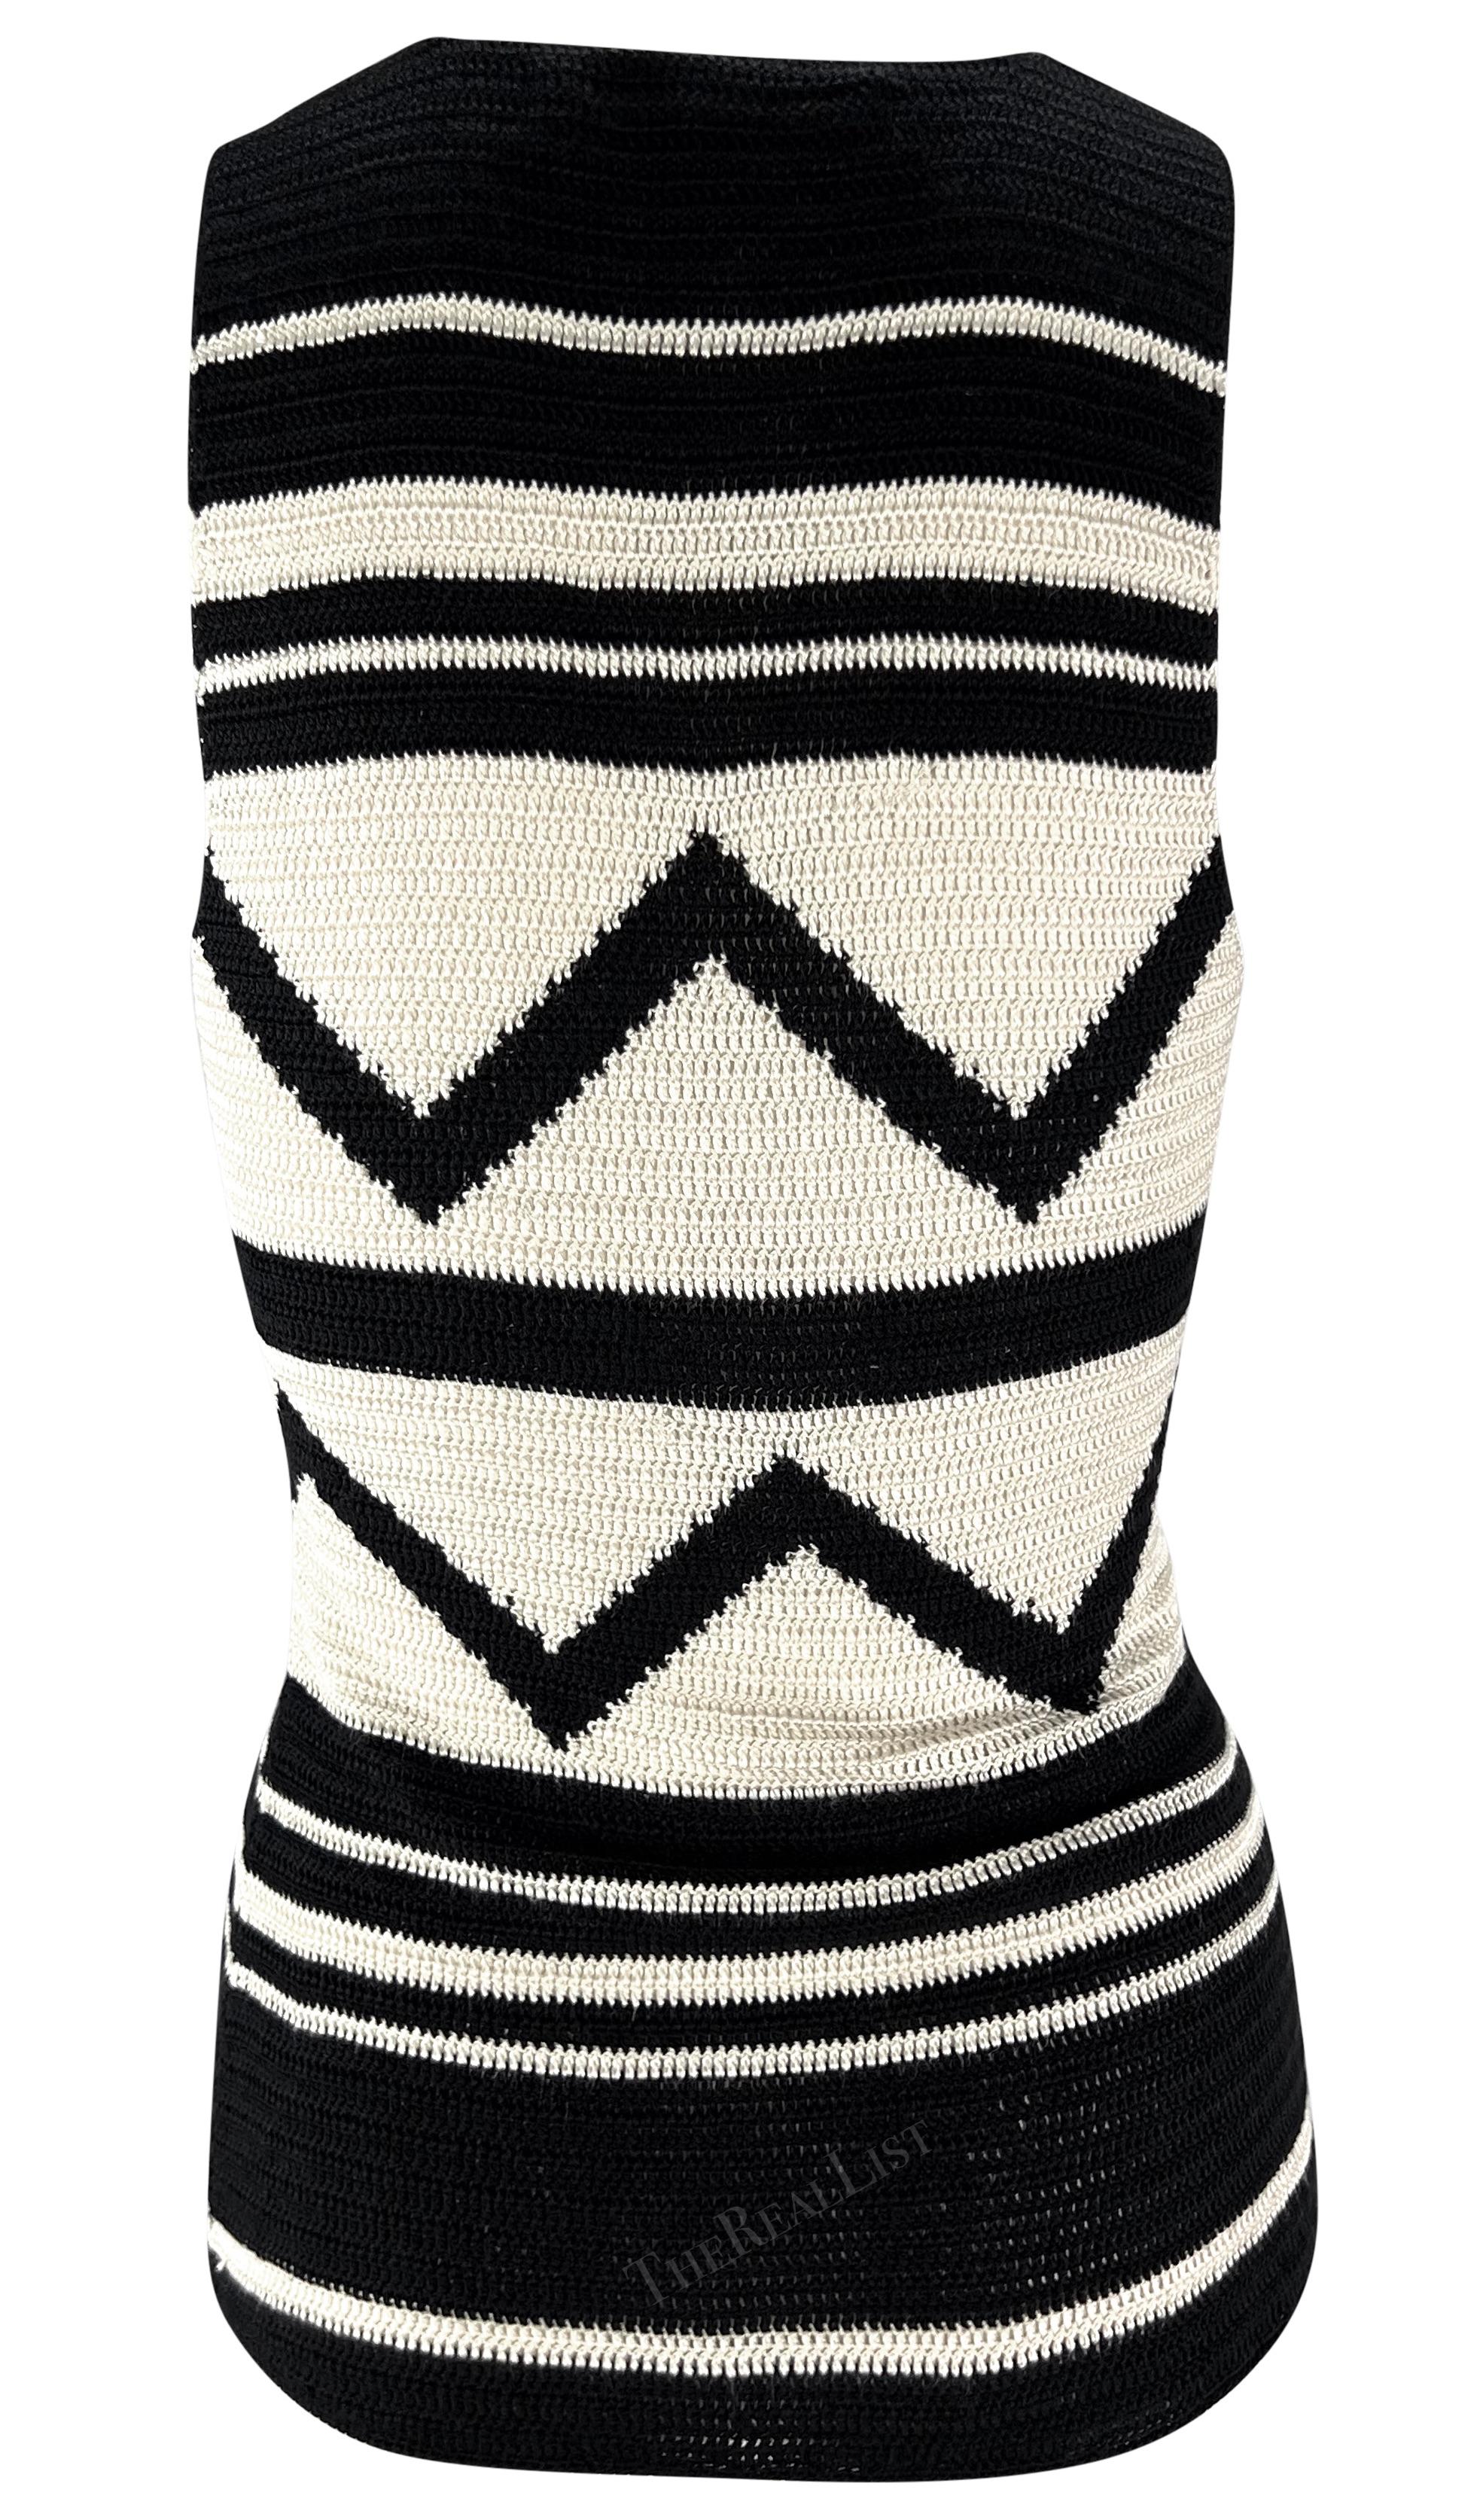 S/S 2001 Ralph Lauren Runway Creme Black Geometric Sheer Knit Silk Sweater Top For Sale 3